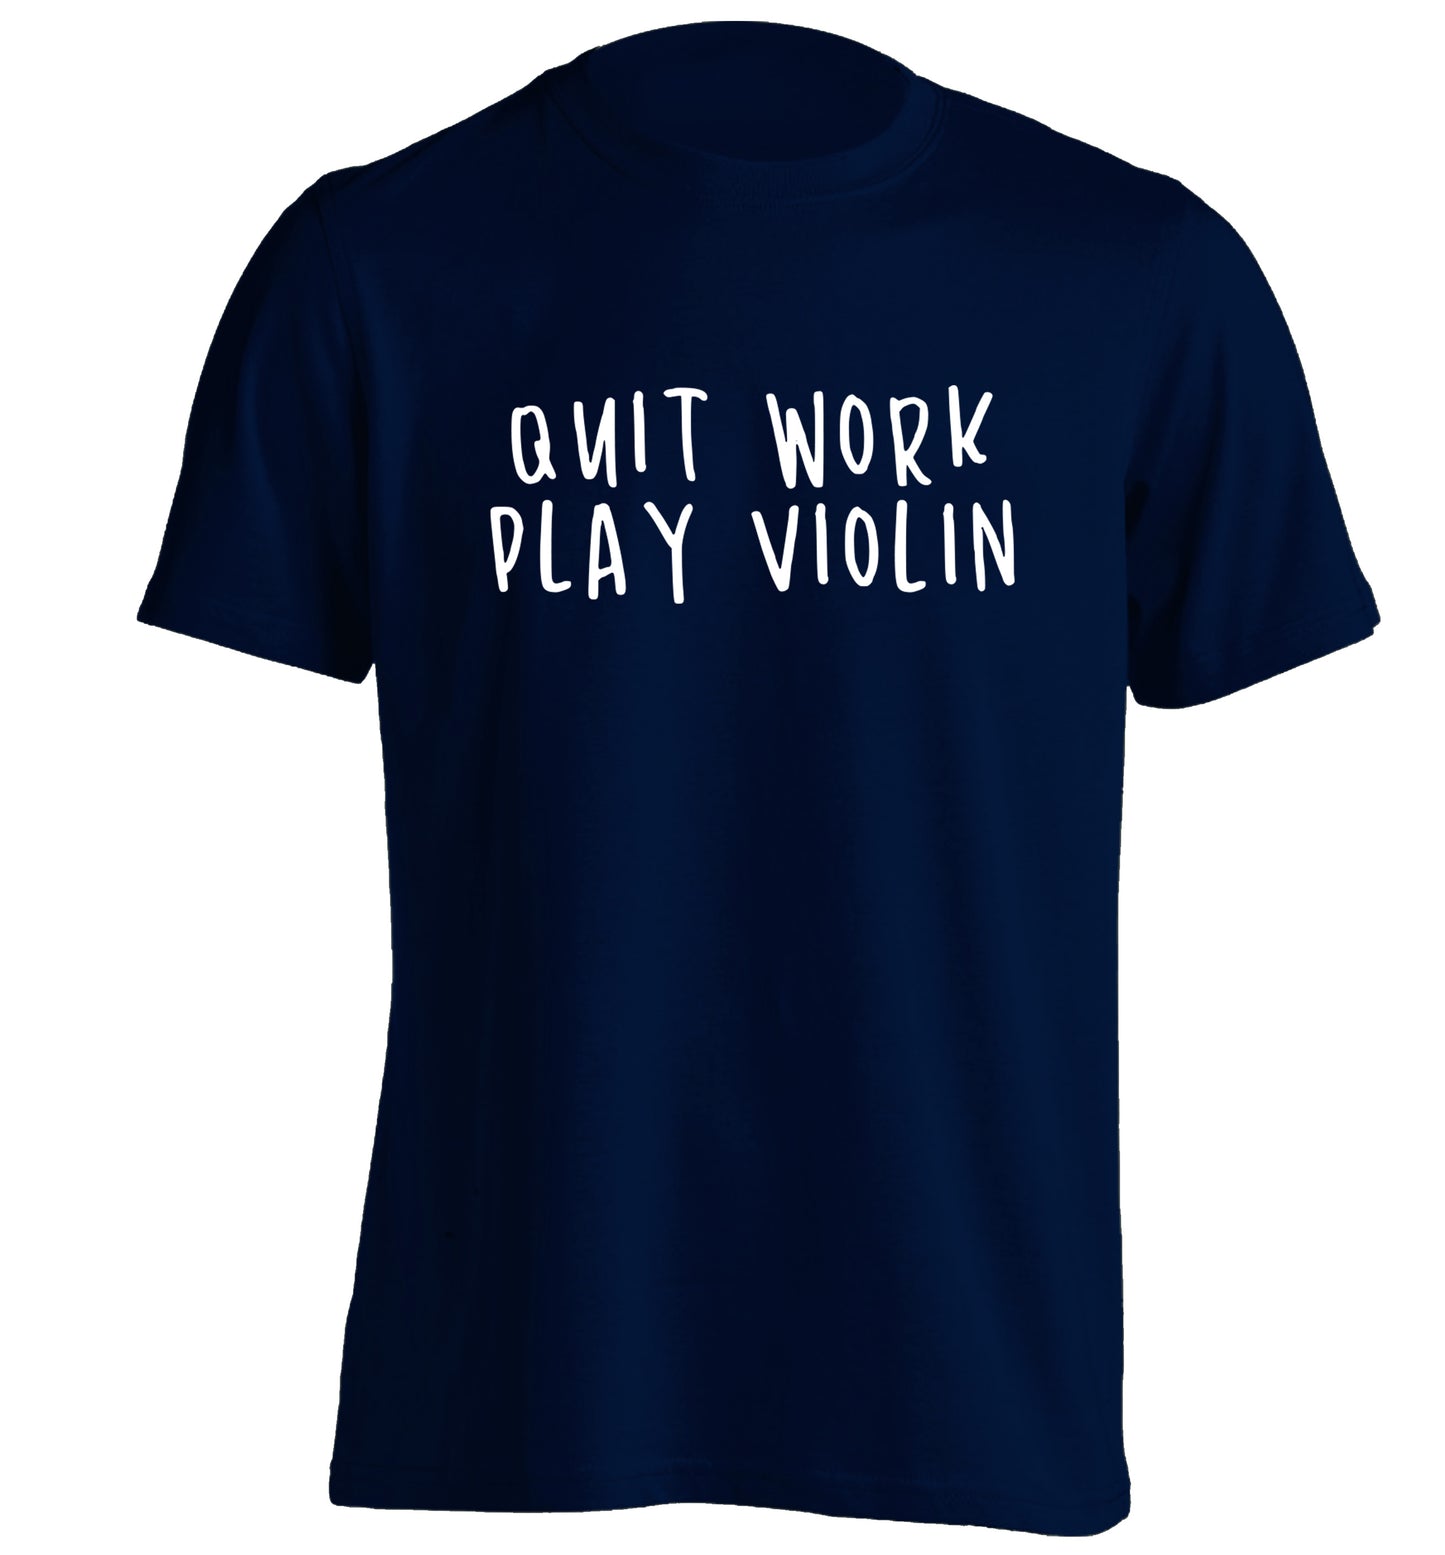 Quit work play violin adults unisex navy Tshirt 2XL